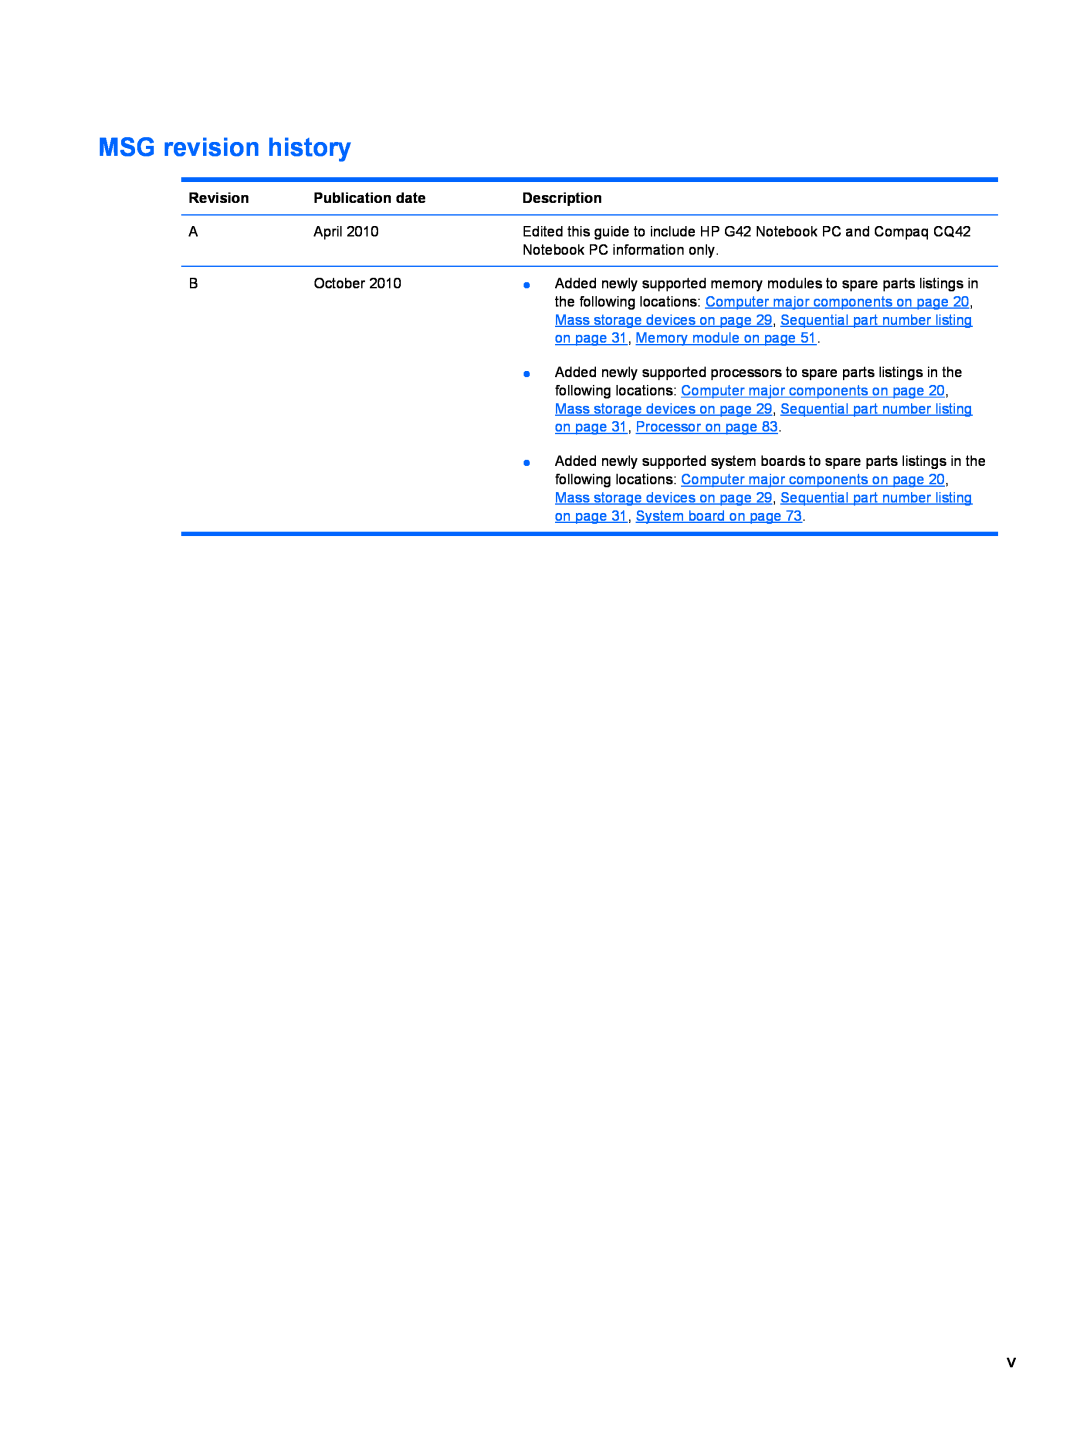 Compaq CQ42 manual MSG revision history, Revision, Publication date, Description 